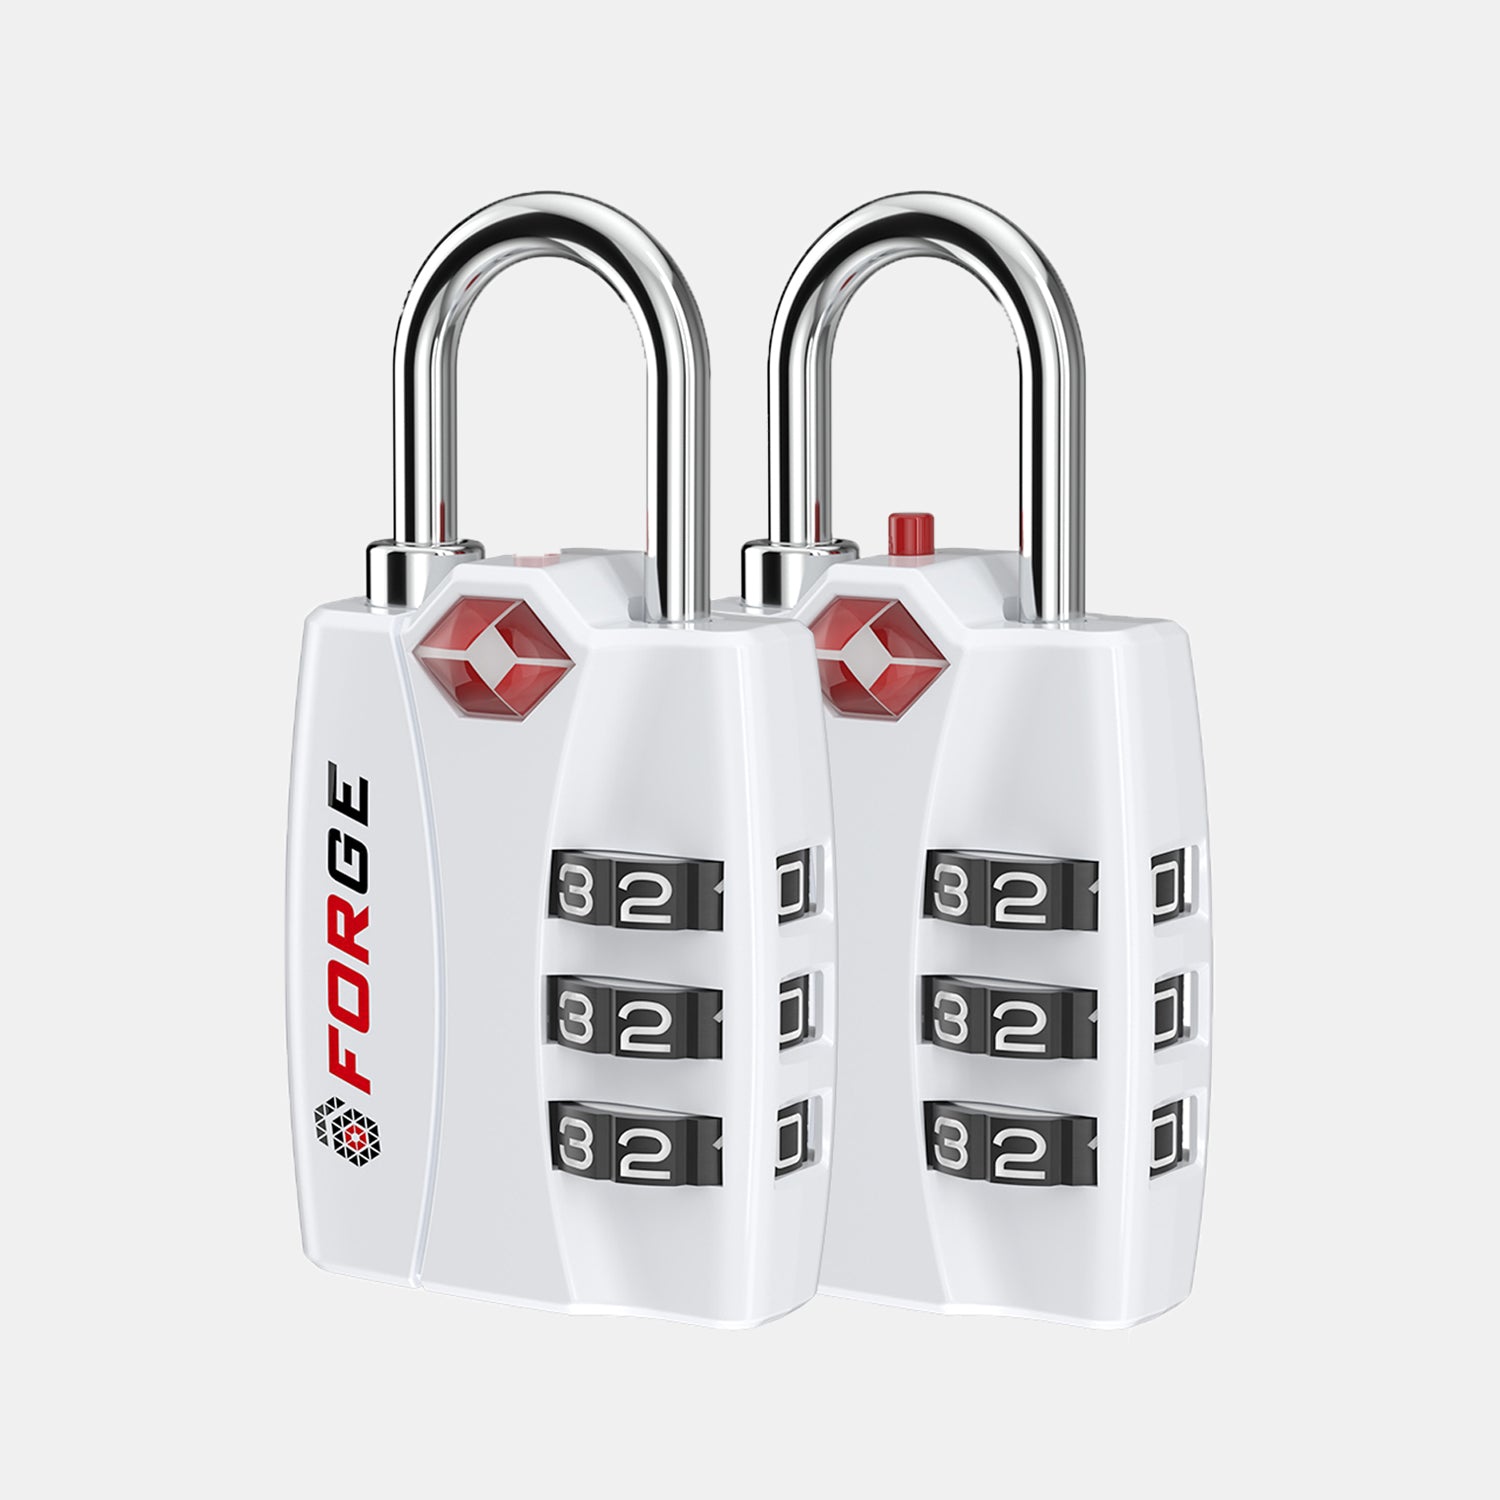 TSA-Approved Luggage Locks: 3-Digit Combination, Open Alert Indicator, White 2 Locks